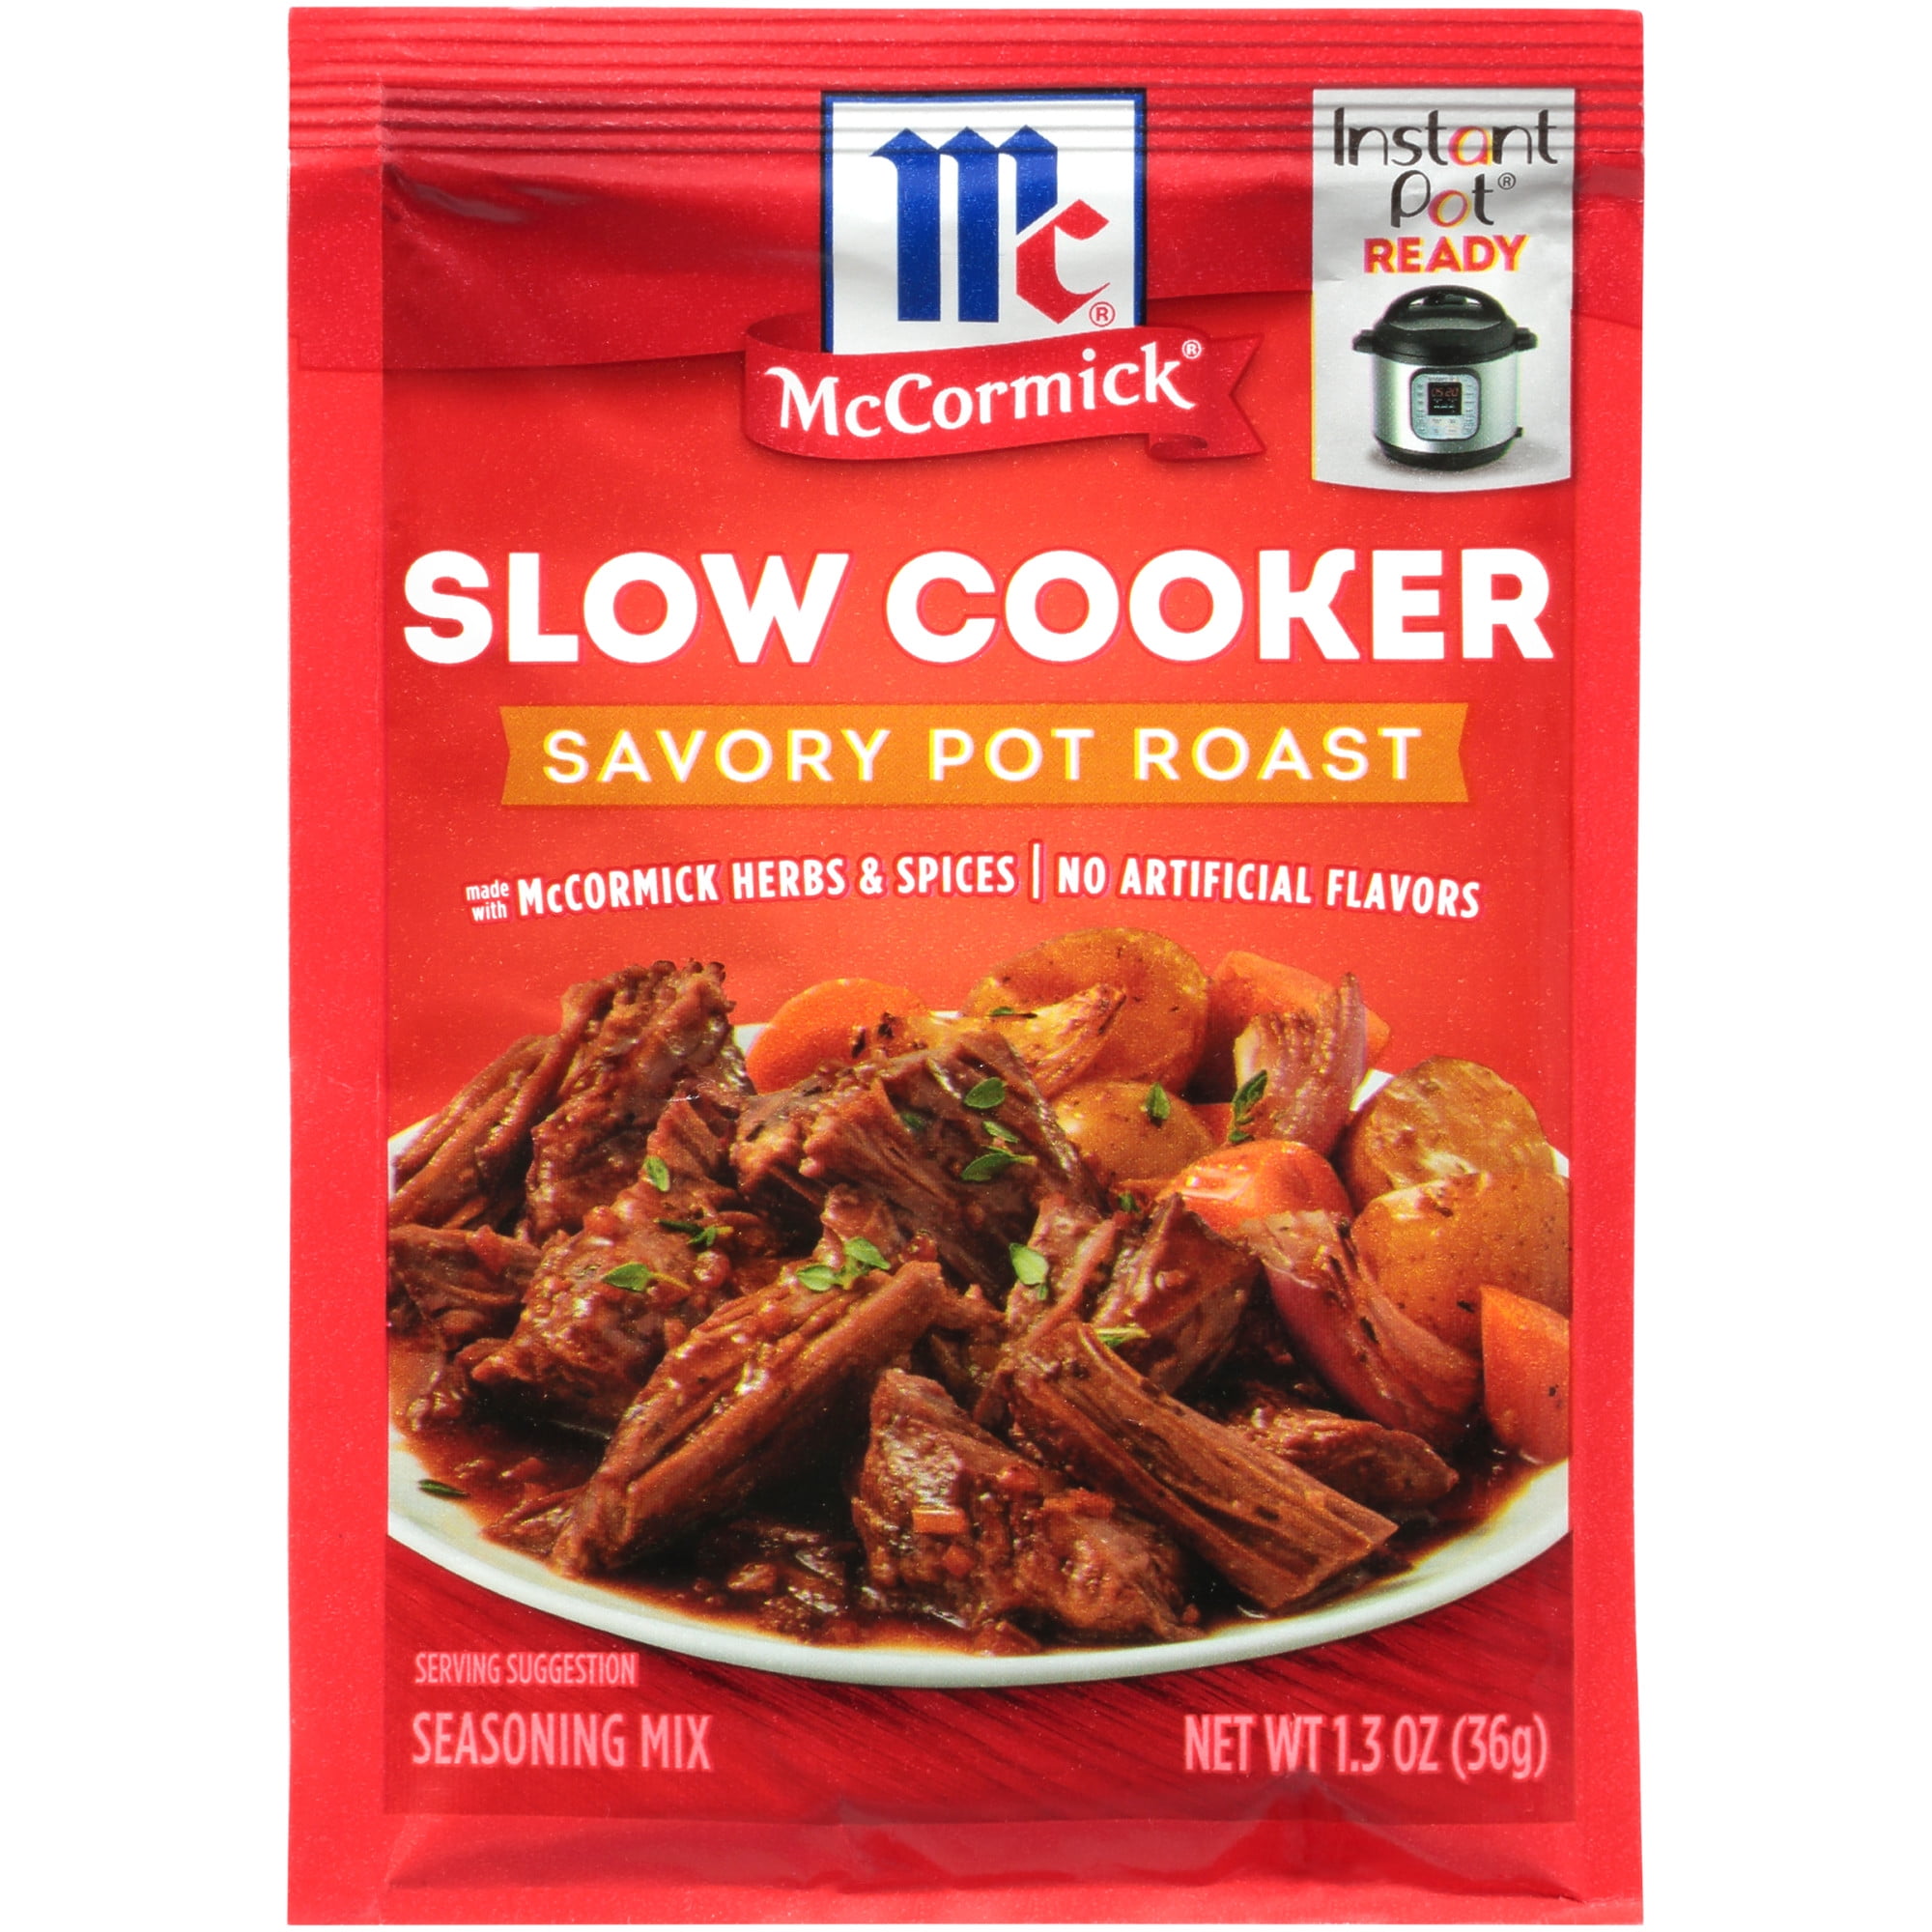 McCormick Slow Cooker Pot Roast Seasoning Mix - Savory, 1.3 oz